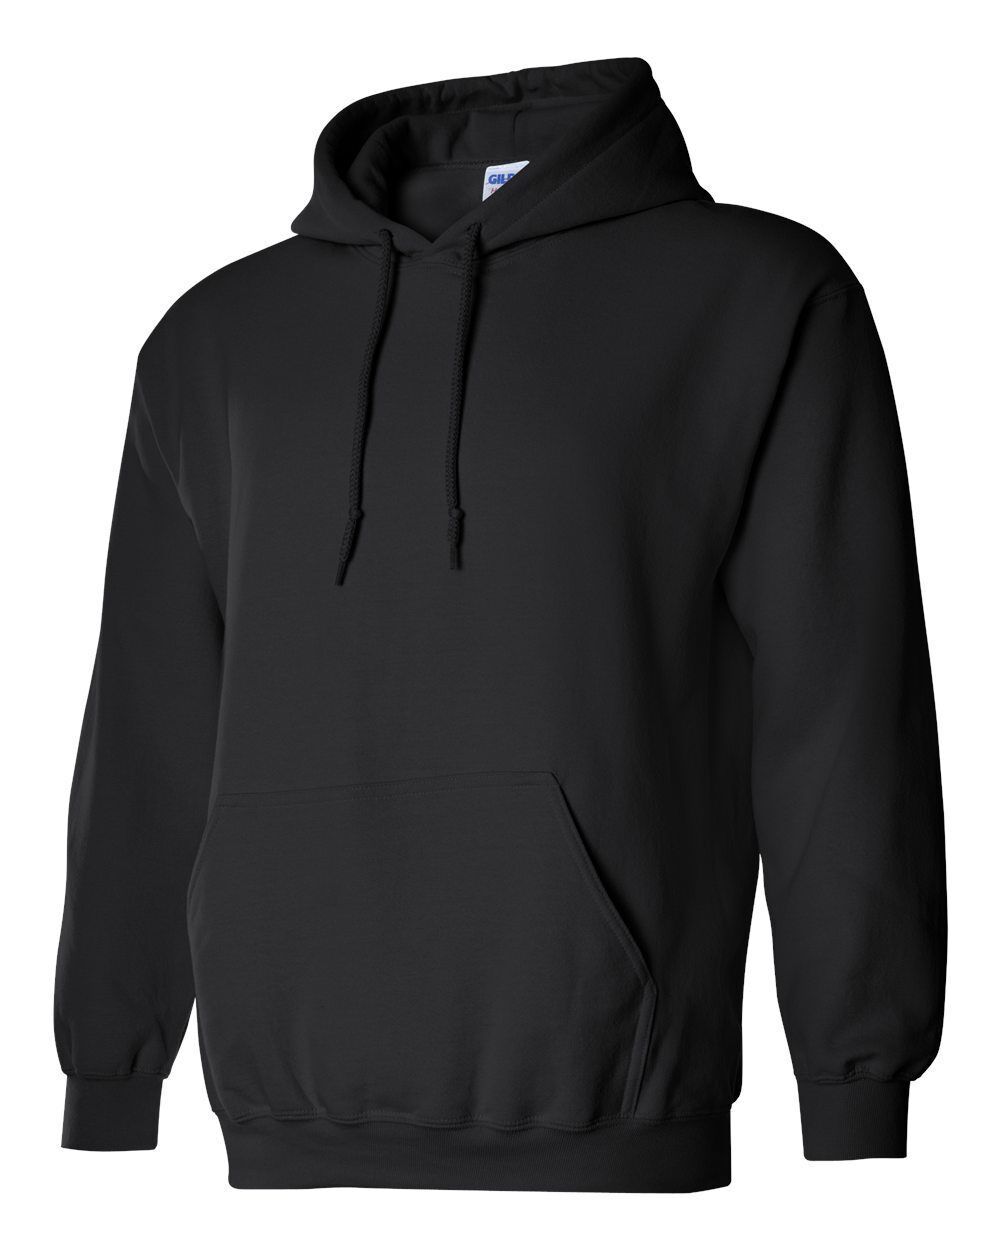 24 Gildan BLACK Adult Hooded Sweatshirts Bulk Lot Wholesale Hoodie S-XL Gildan